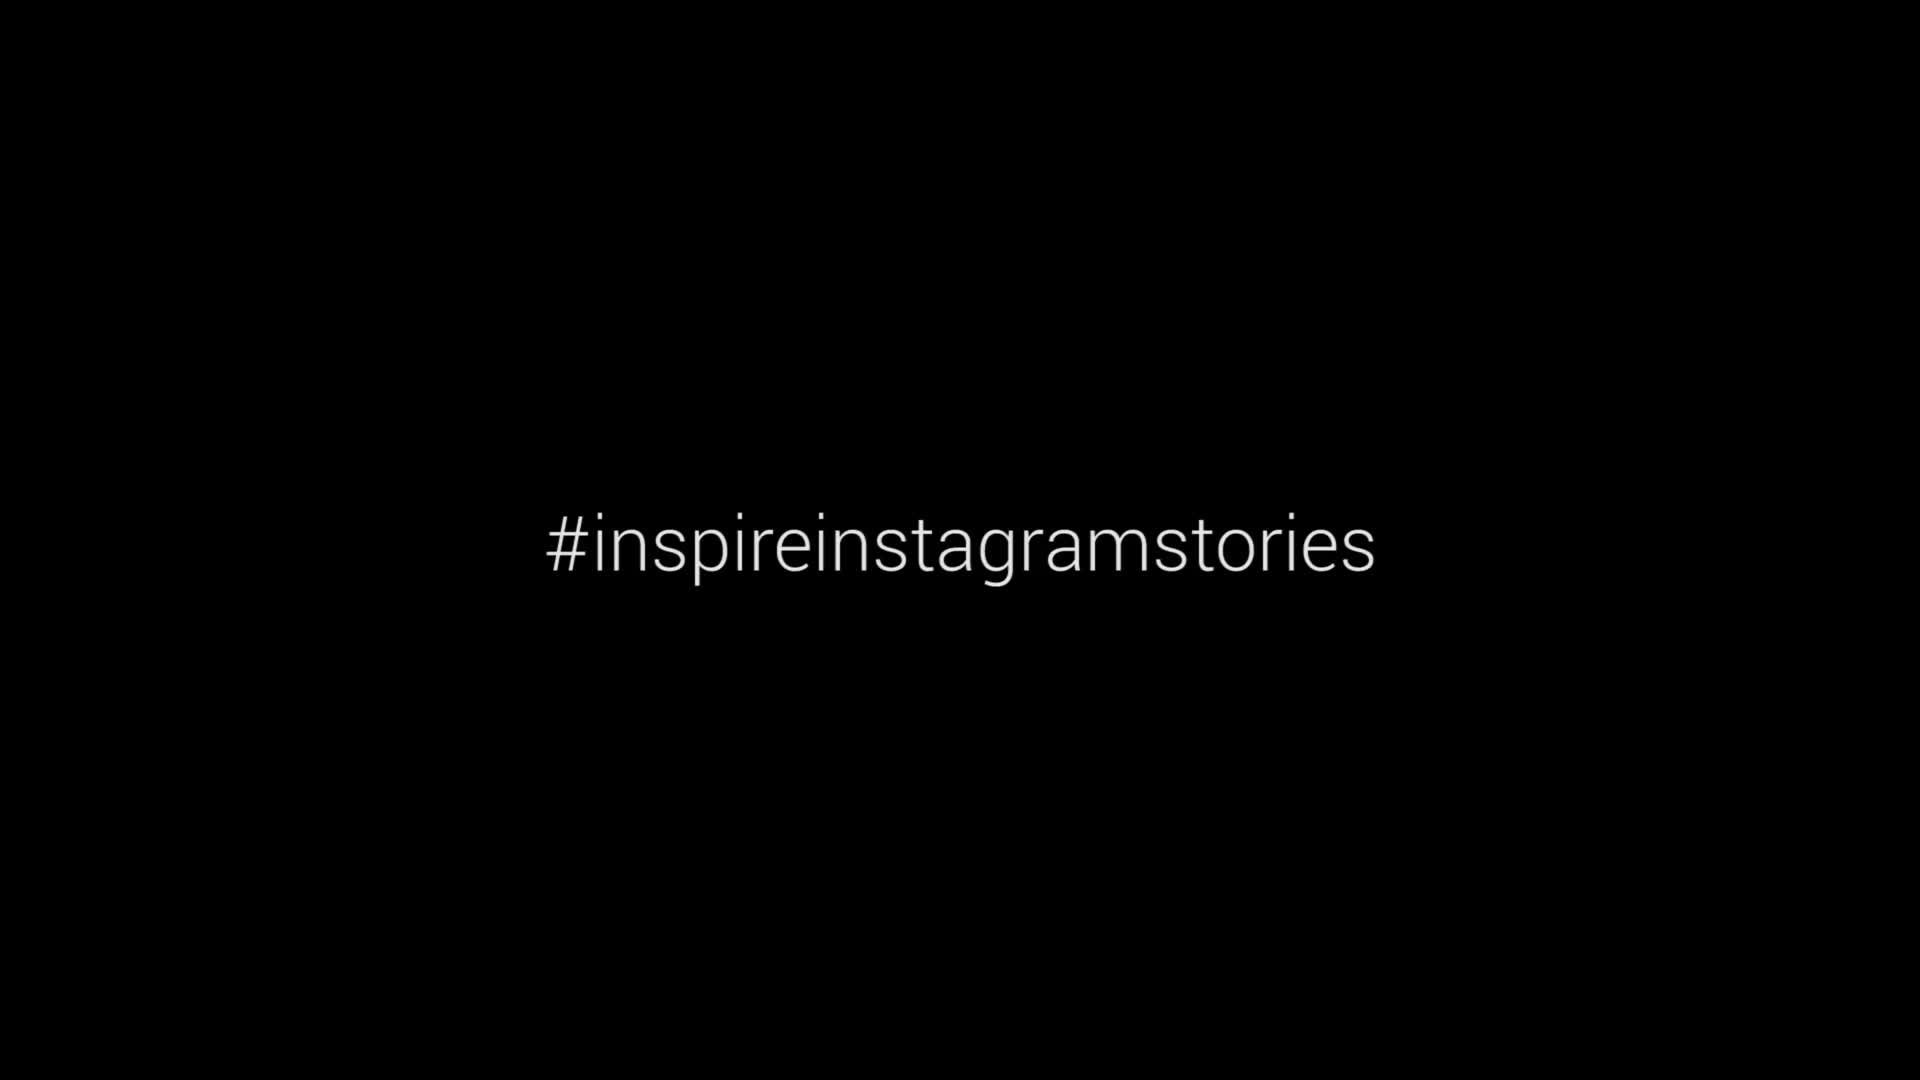 Inspire Instagram Stories - Download Videohive 21652409